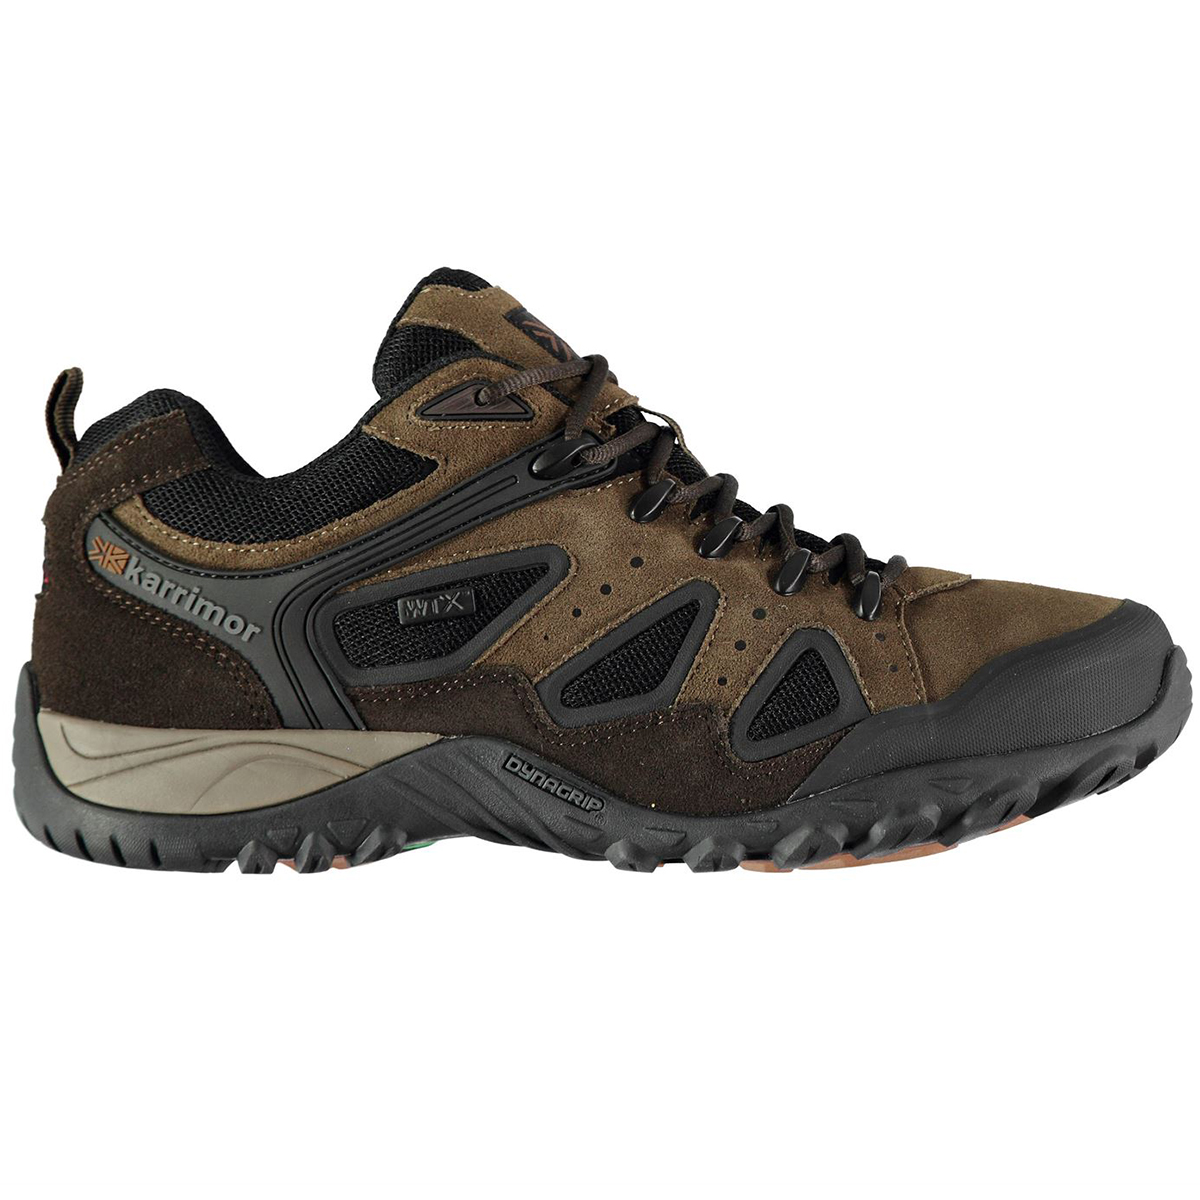 Karrimor Men's Ridge Wtx Waterproof Low Hiking Shoes - Brown, 8